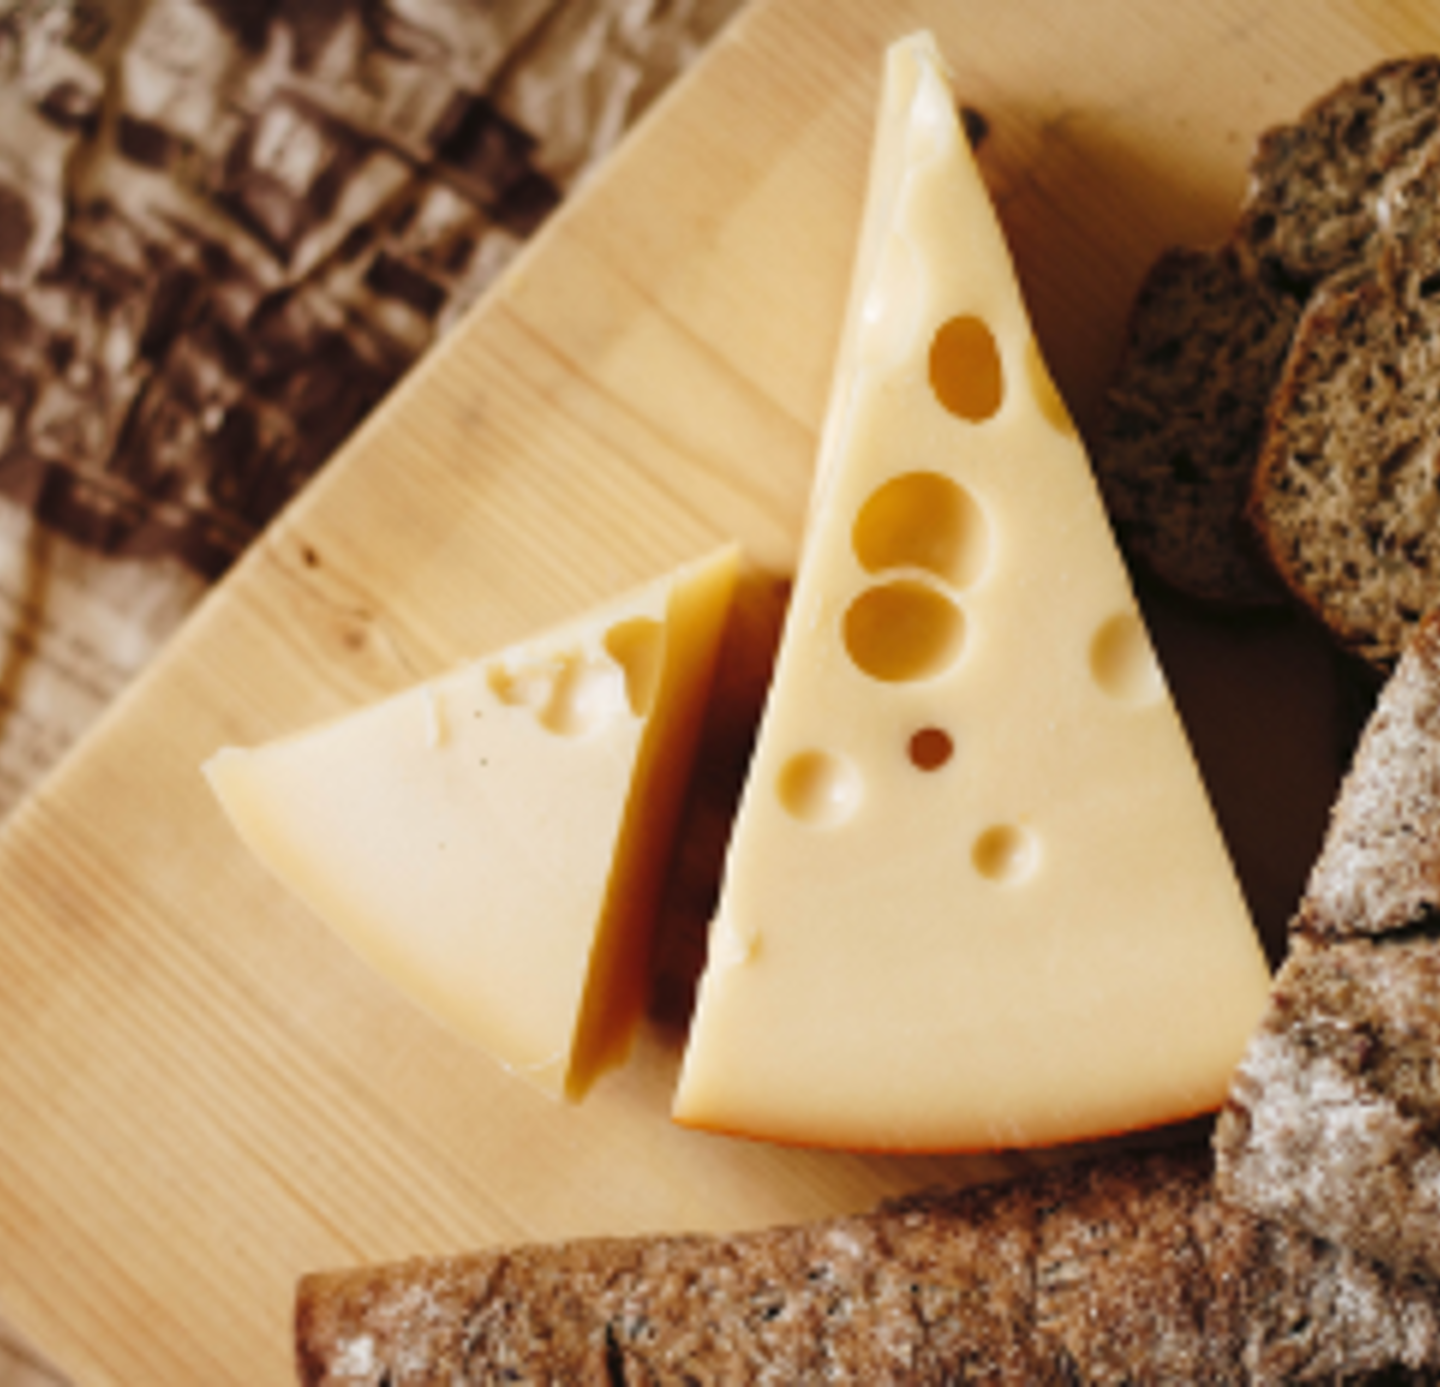 Lactosan Cheese Powders based on natural cheeses